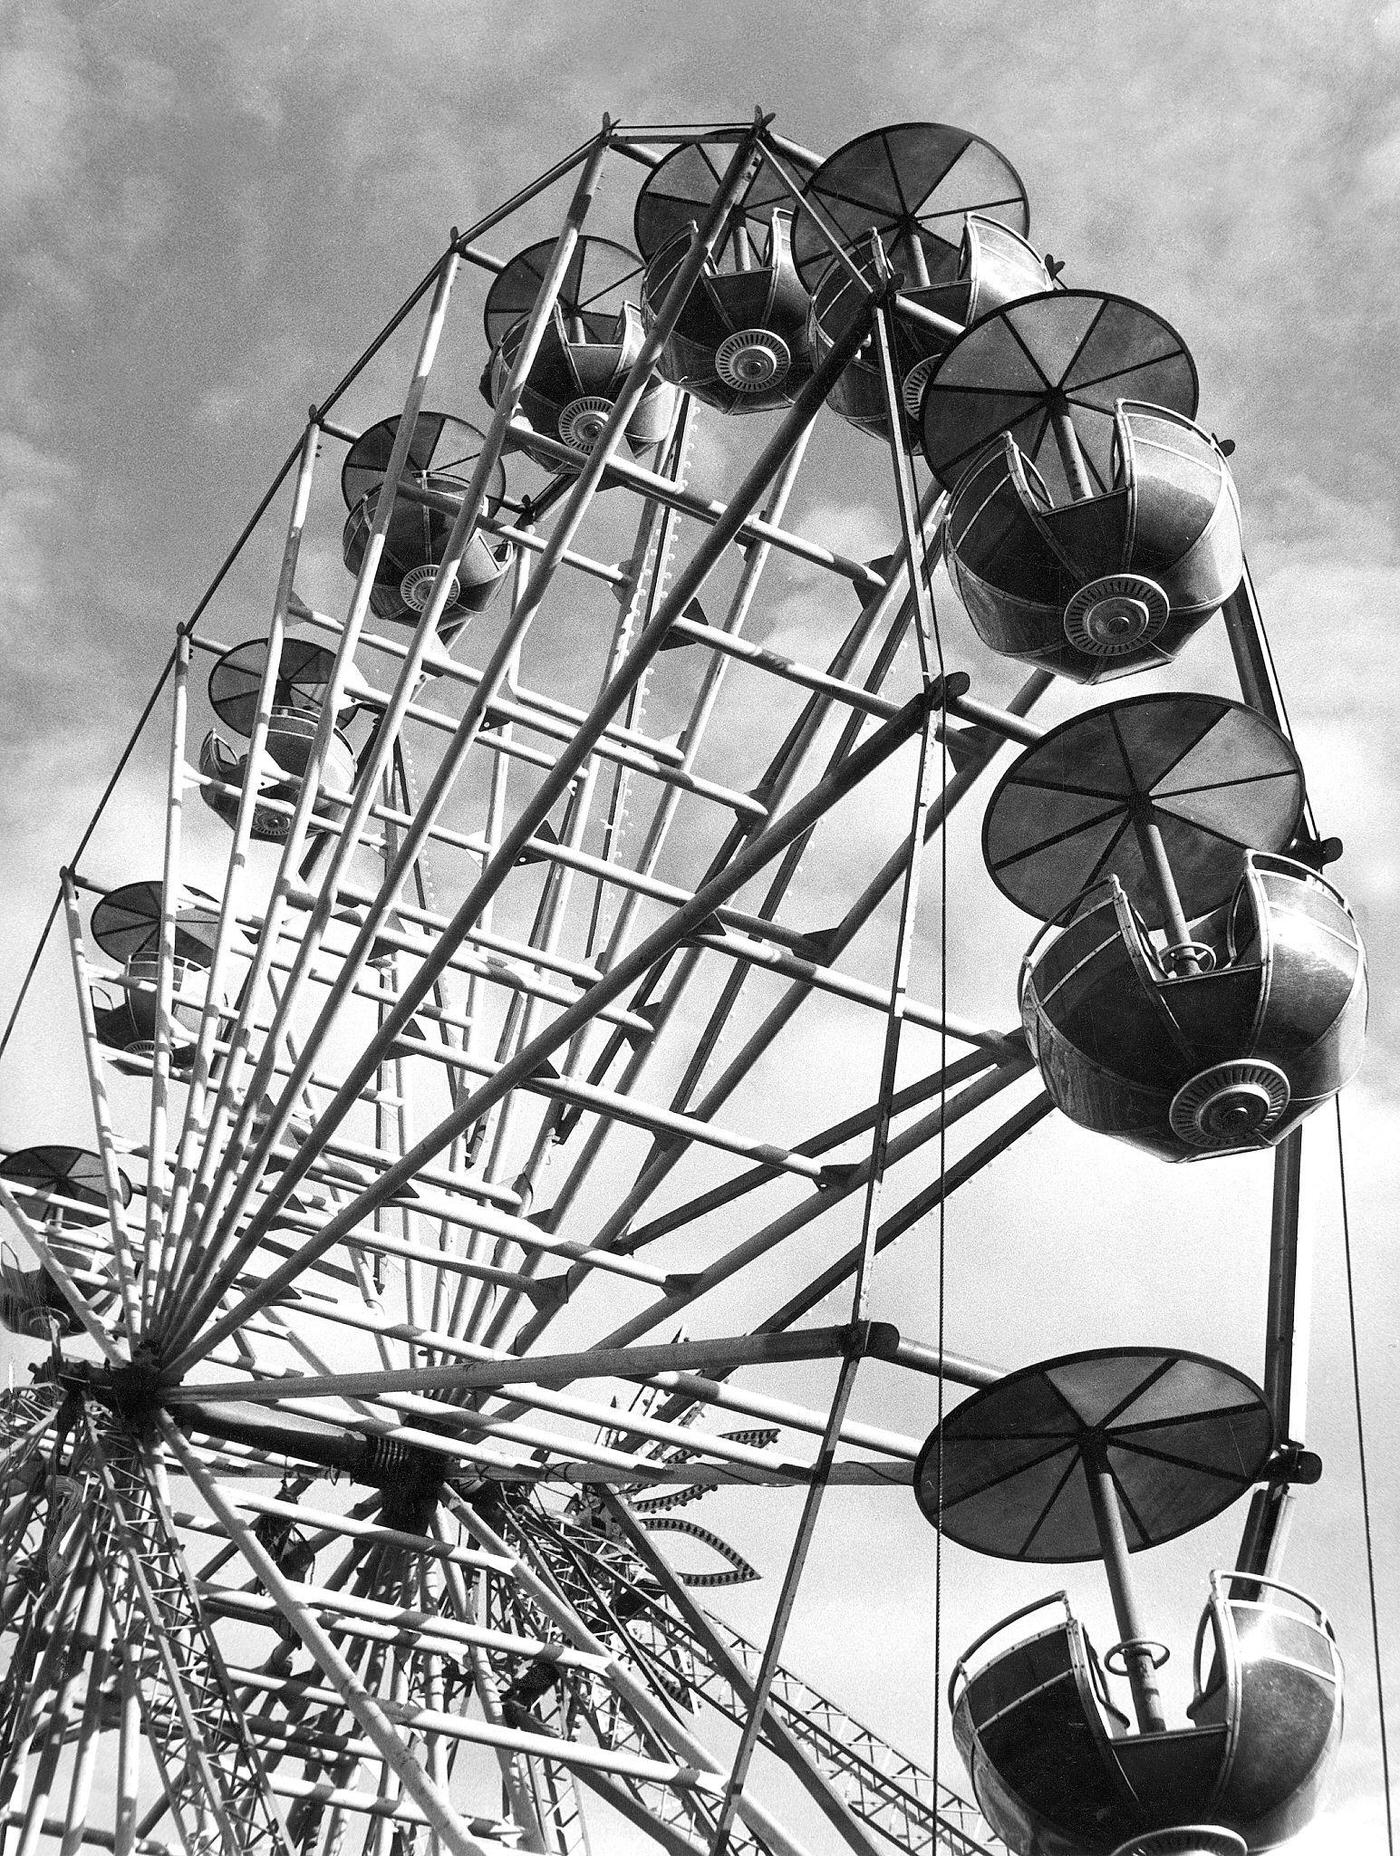 Oktoberfest Berlin, Riesenrad (Giant Wheel). 1962.